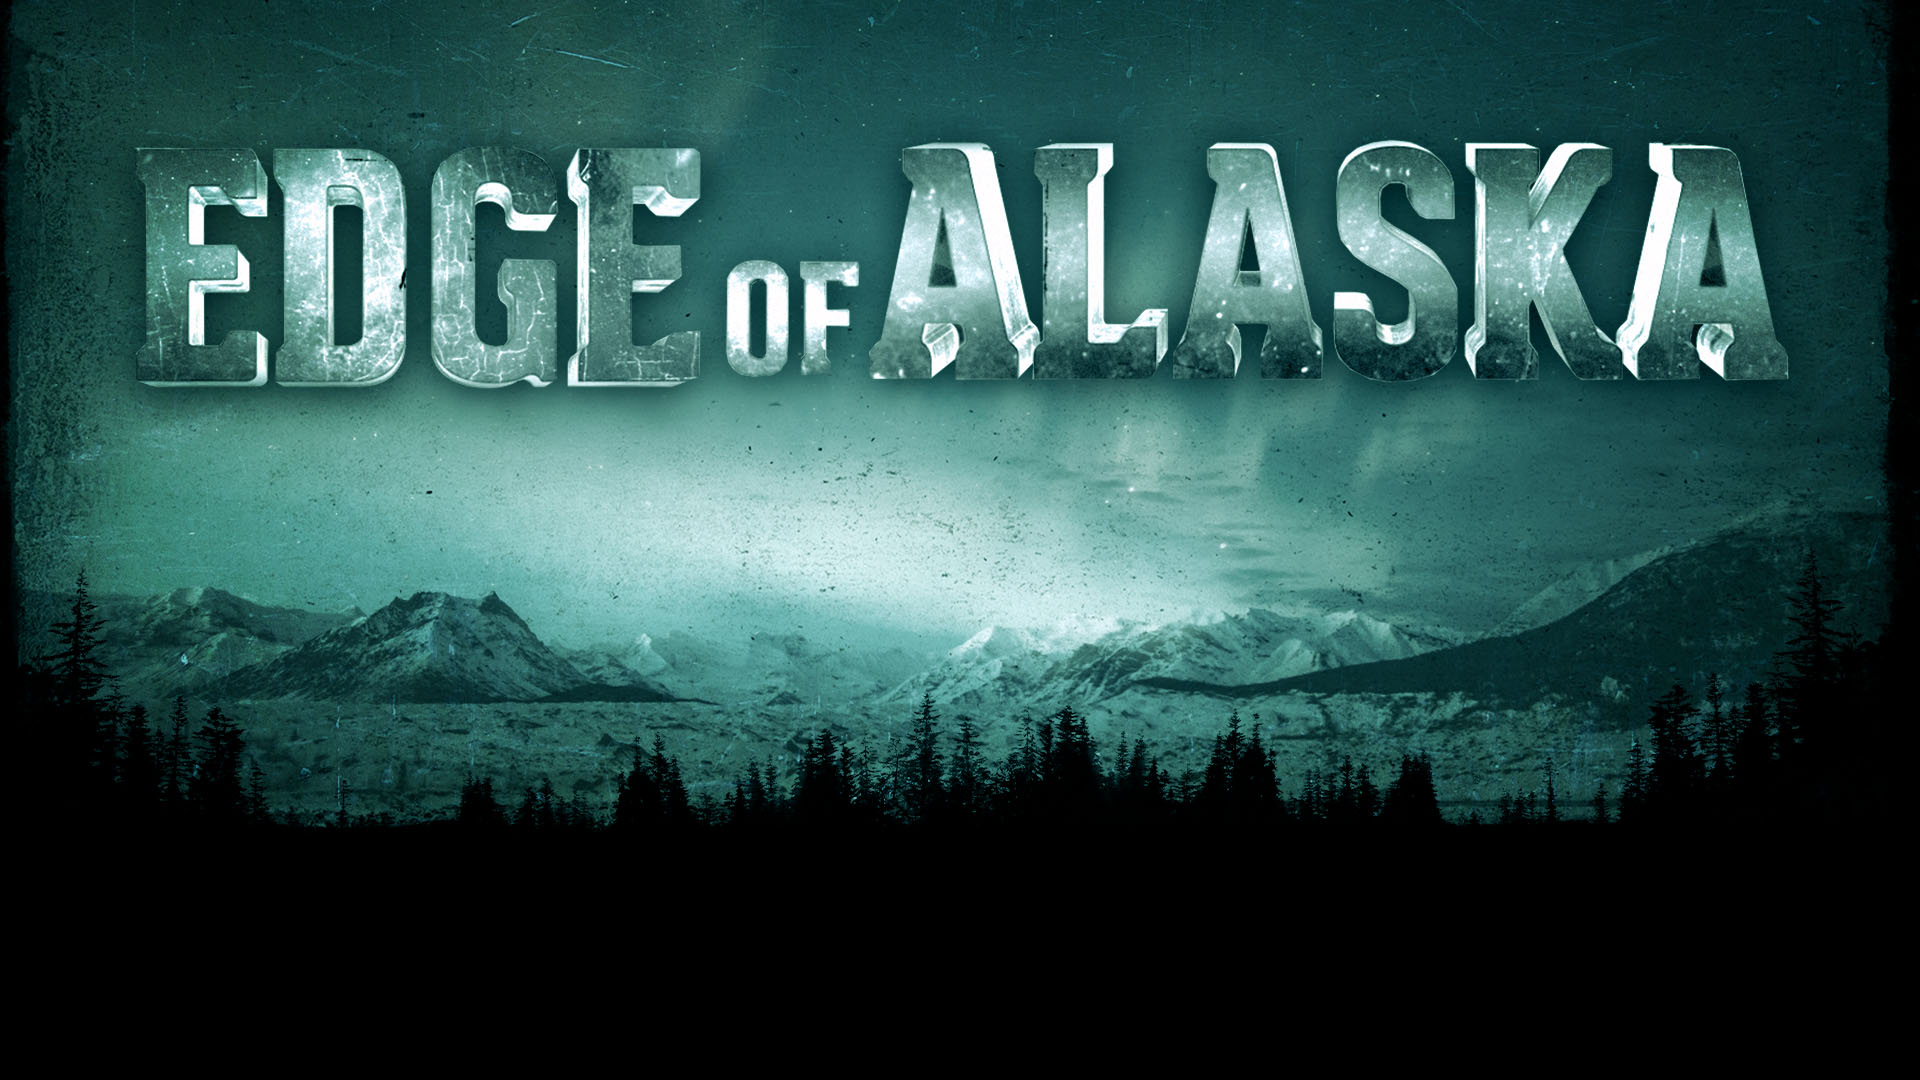 Watch Edge of Alaska live or ondemand Freeview Australia